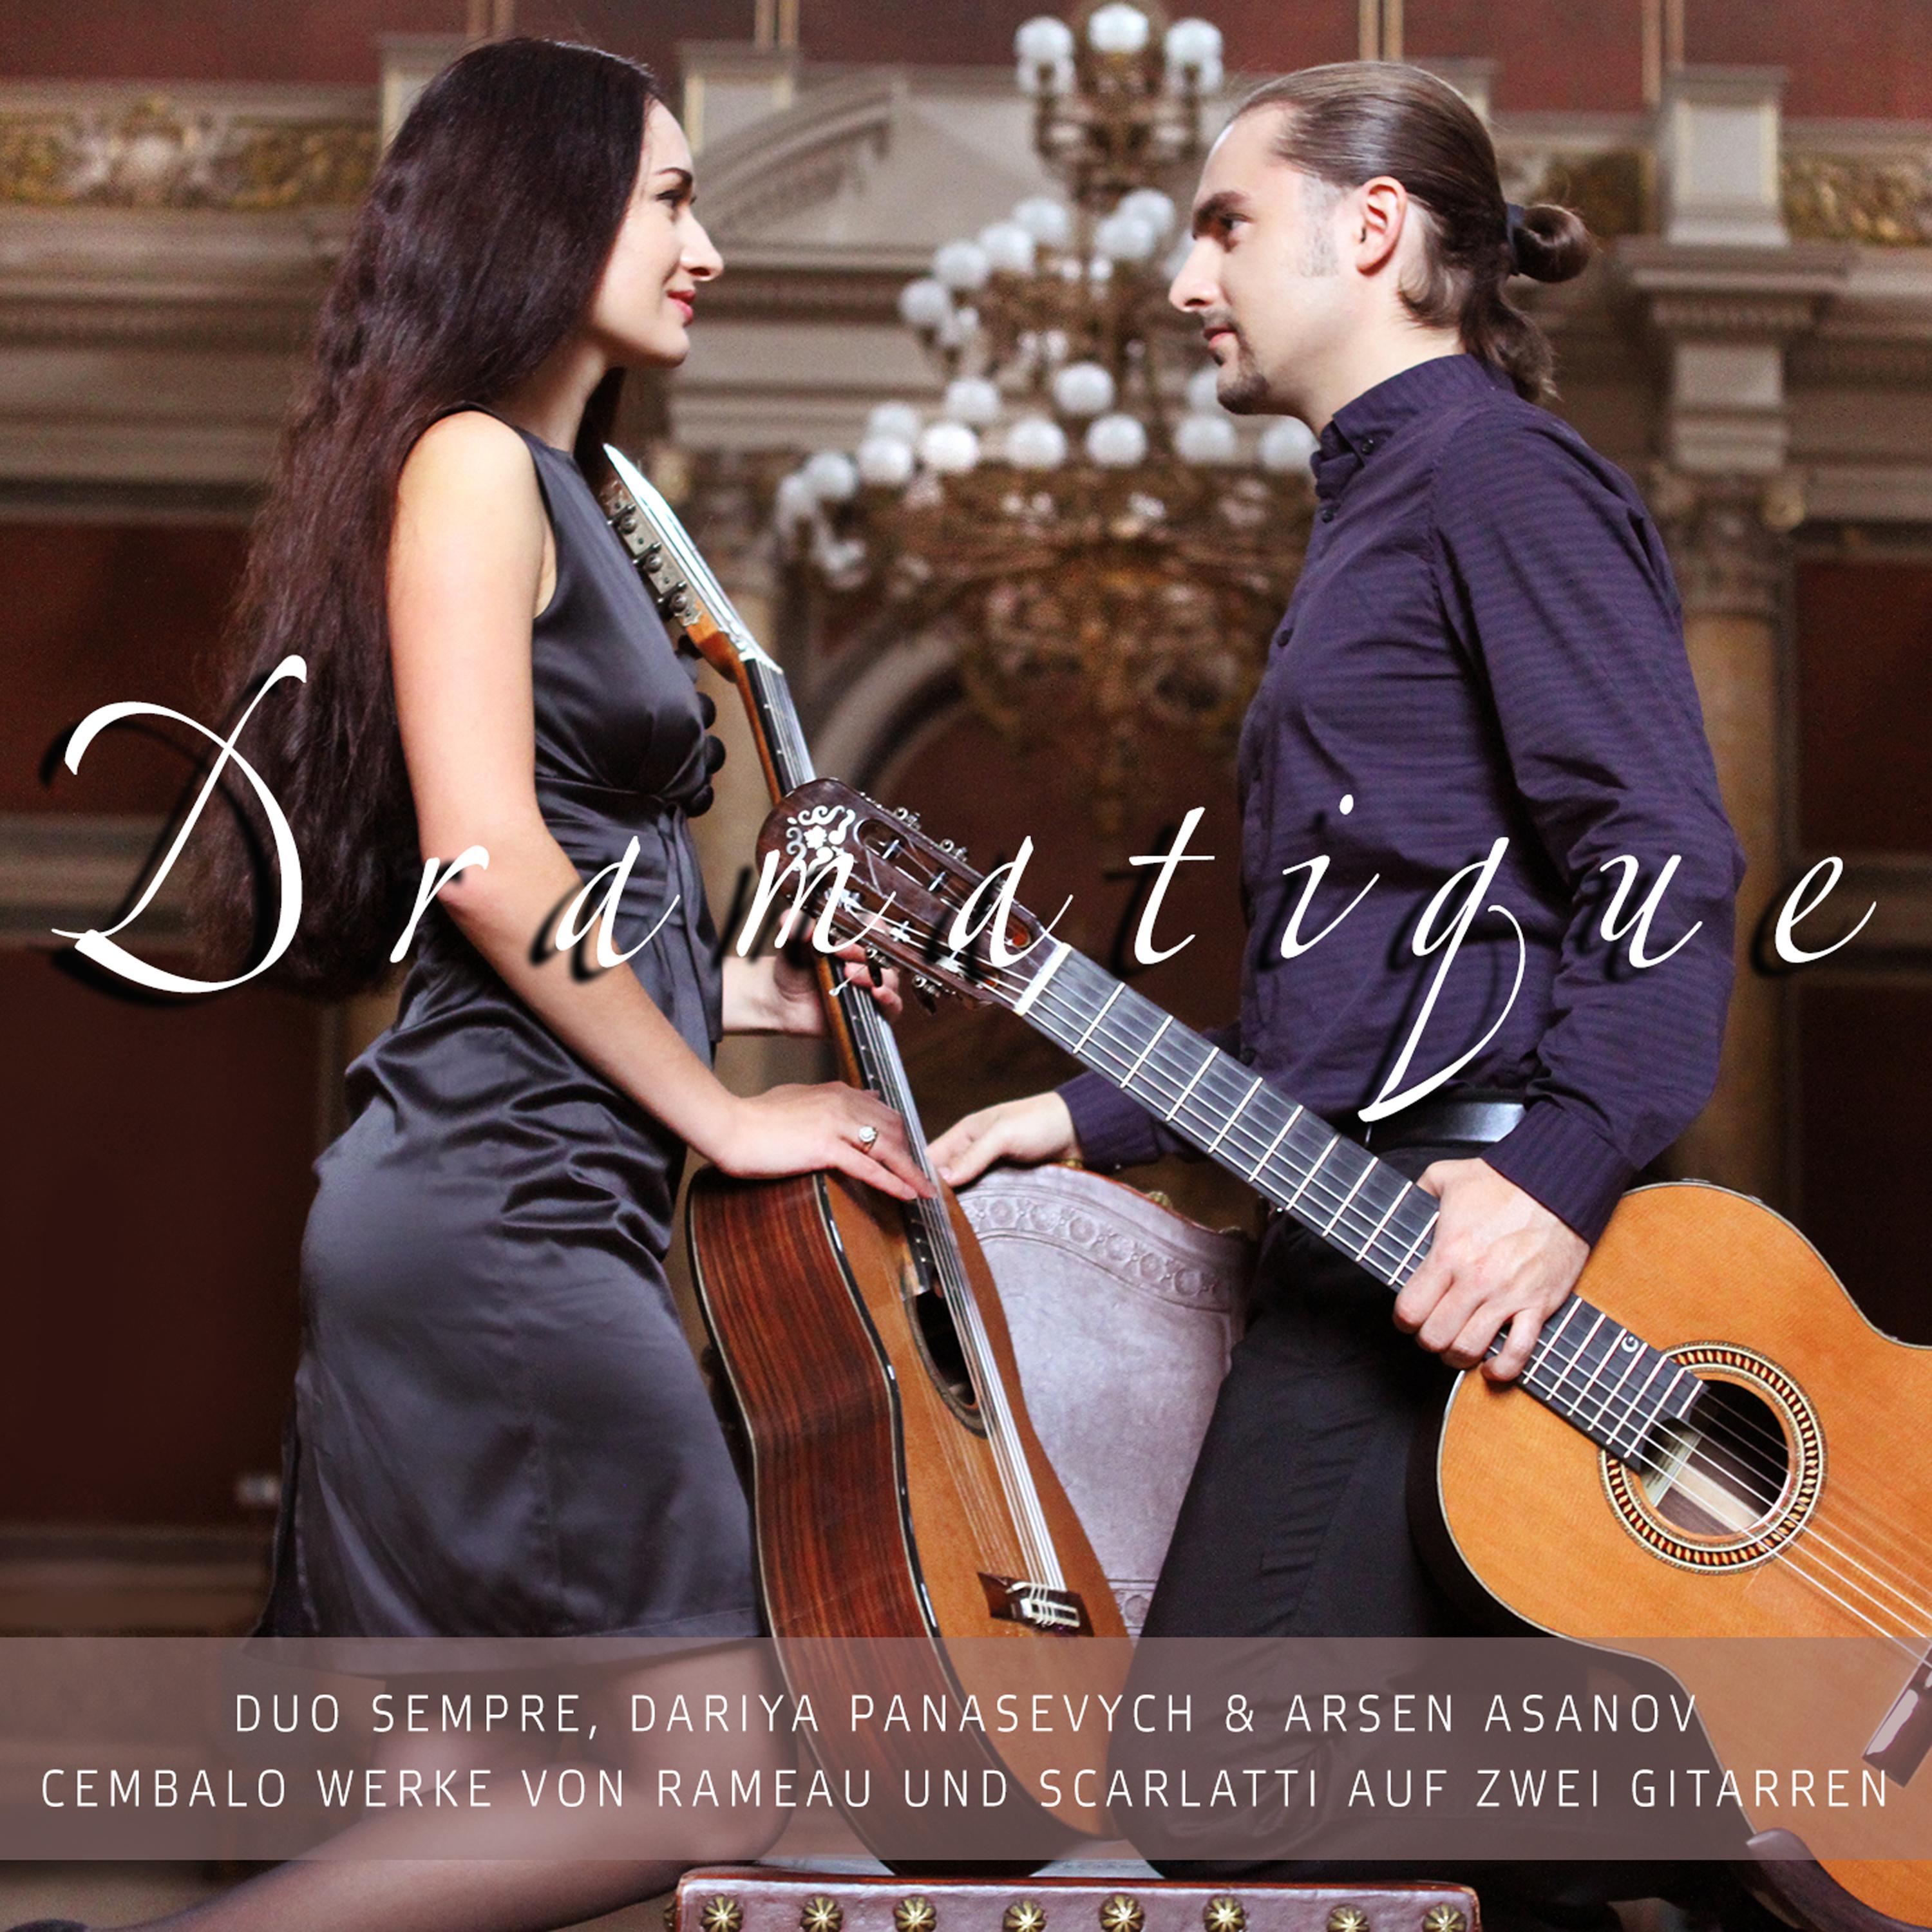 Harpsichord Suite in D-Major (Arr. for two guitars): Les Cyclopes